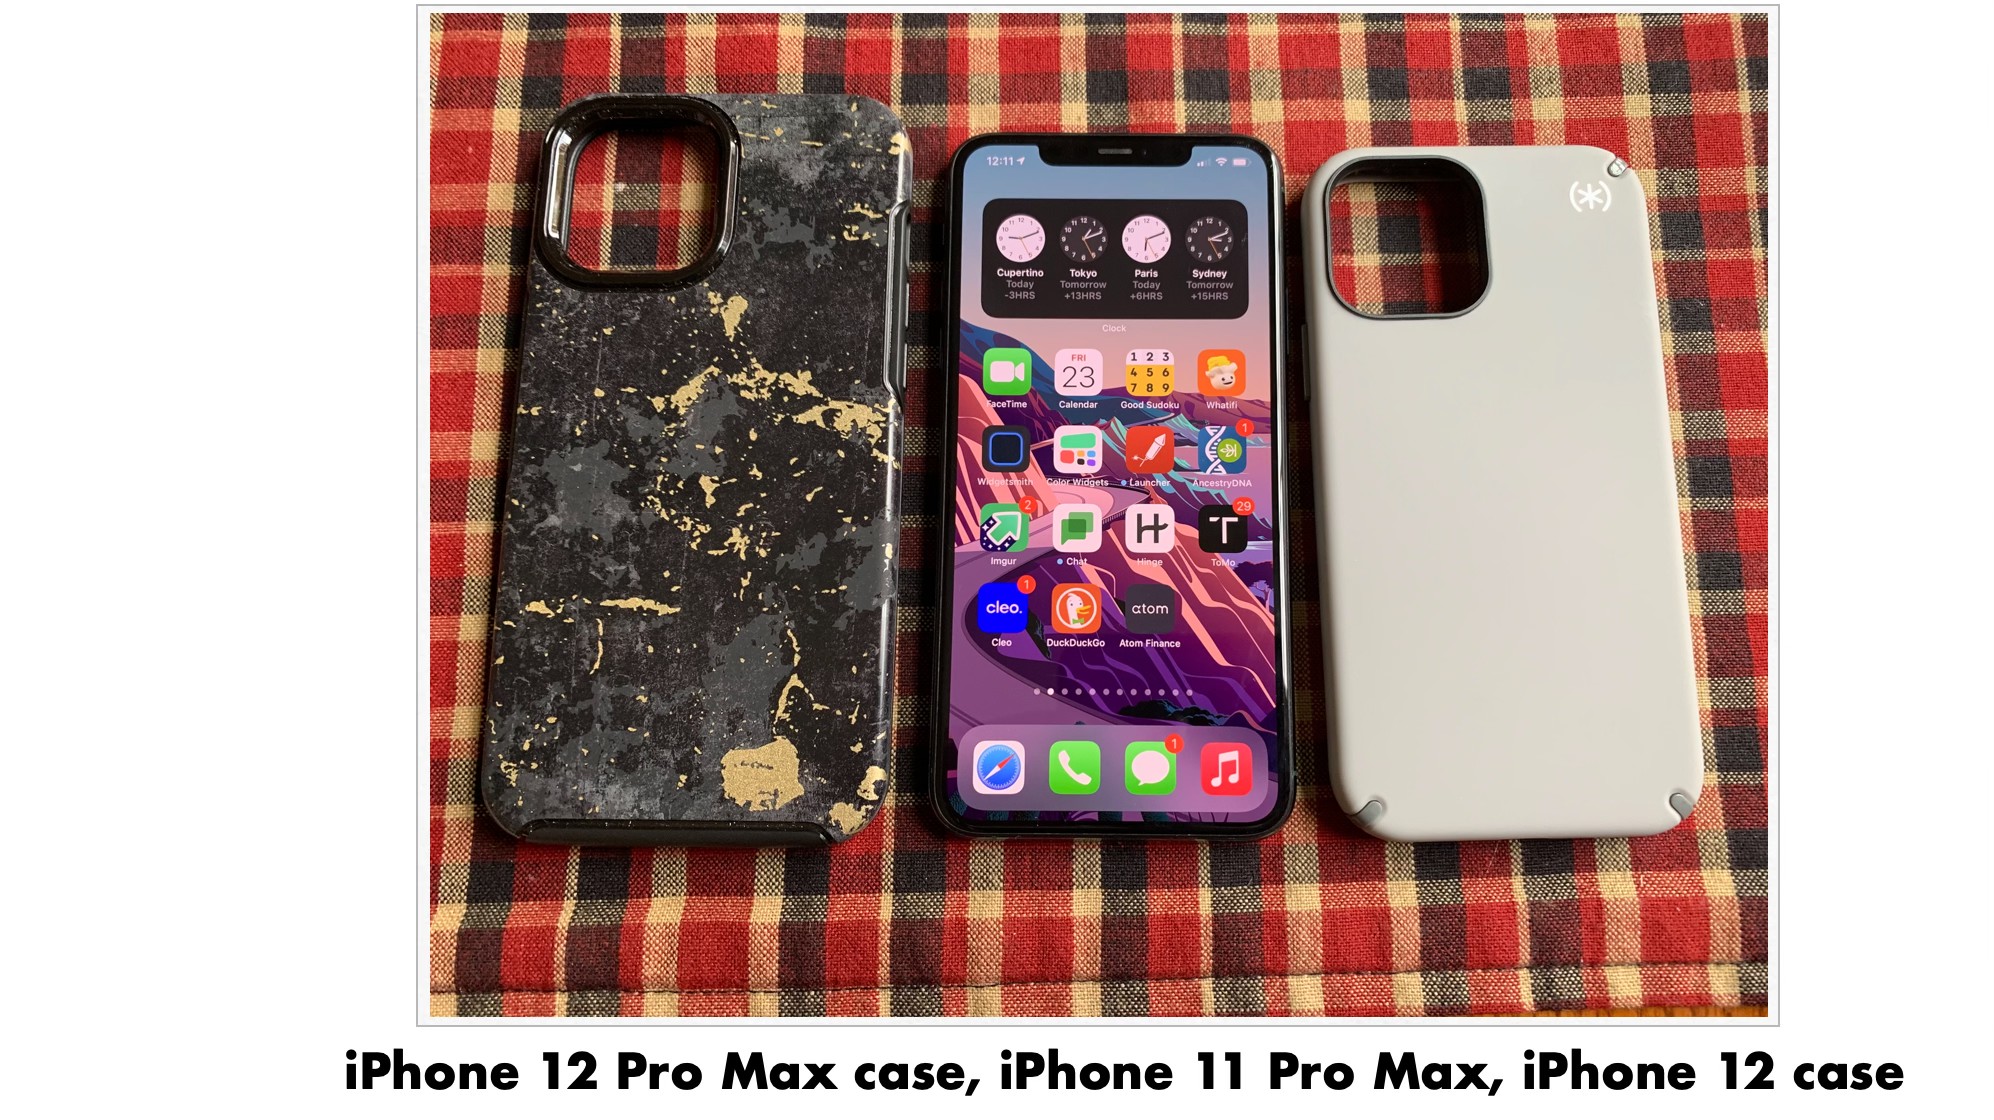 iPhone comparisons, iPhone 12 Pro Max, iPhone 11 Pro Max, iPhone 12